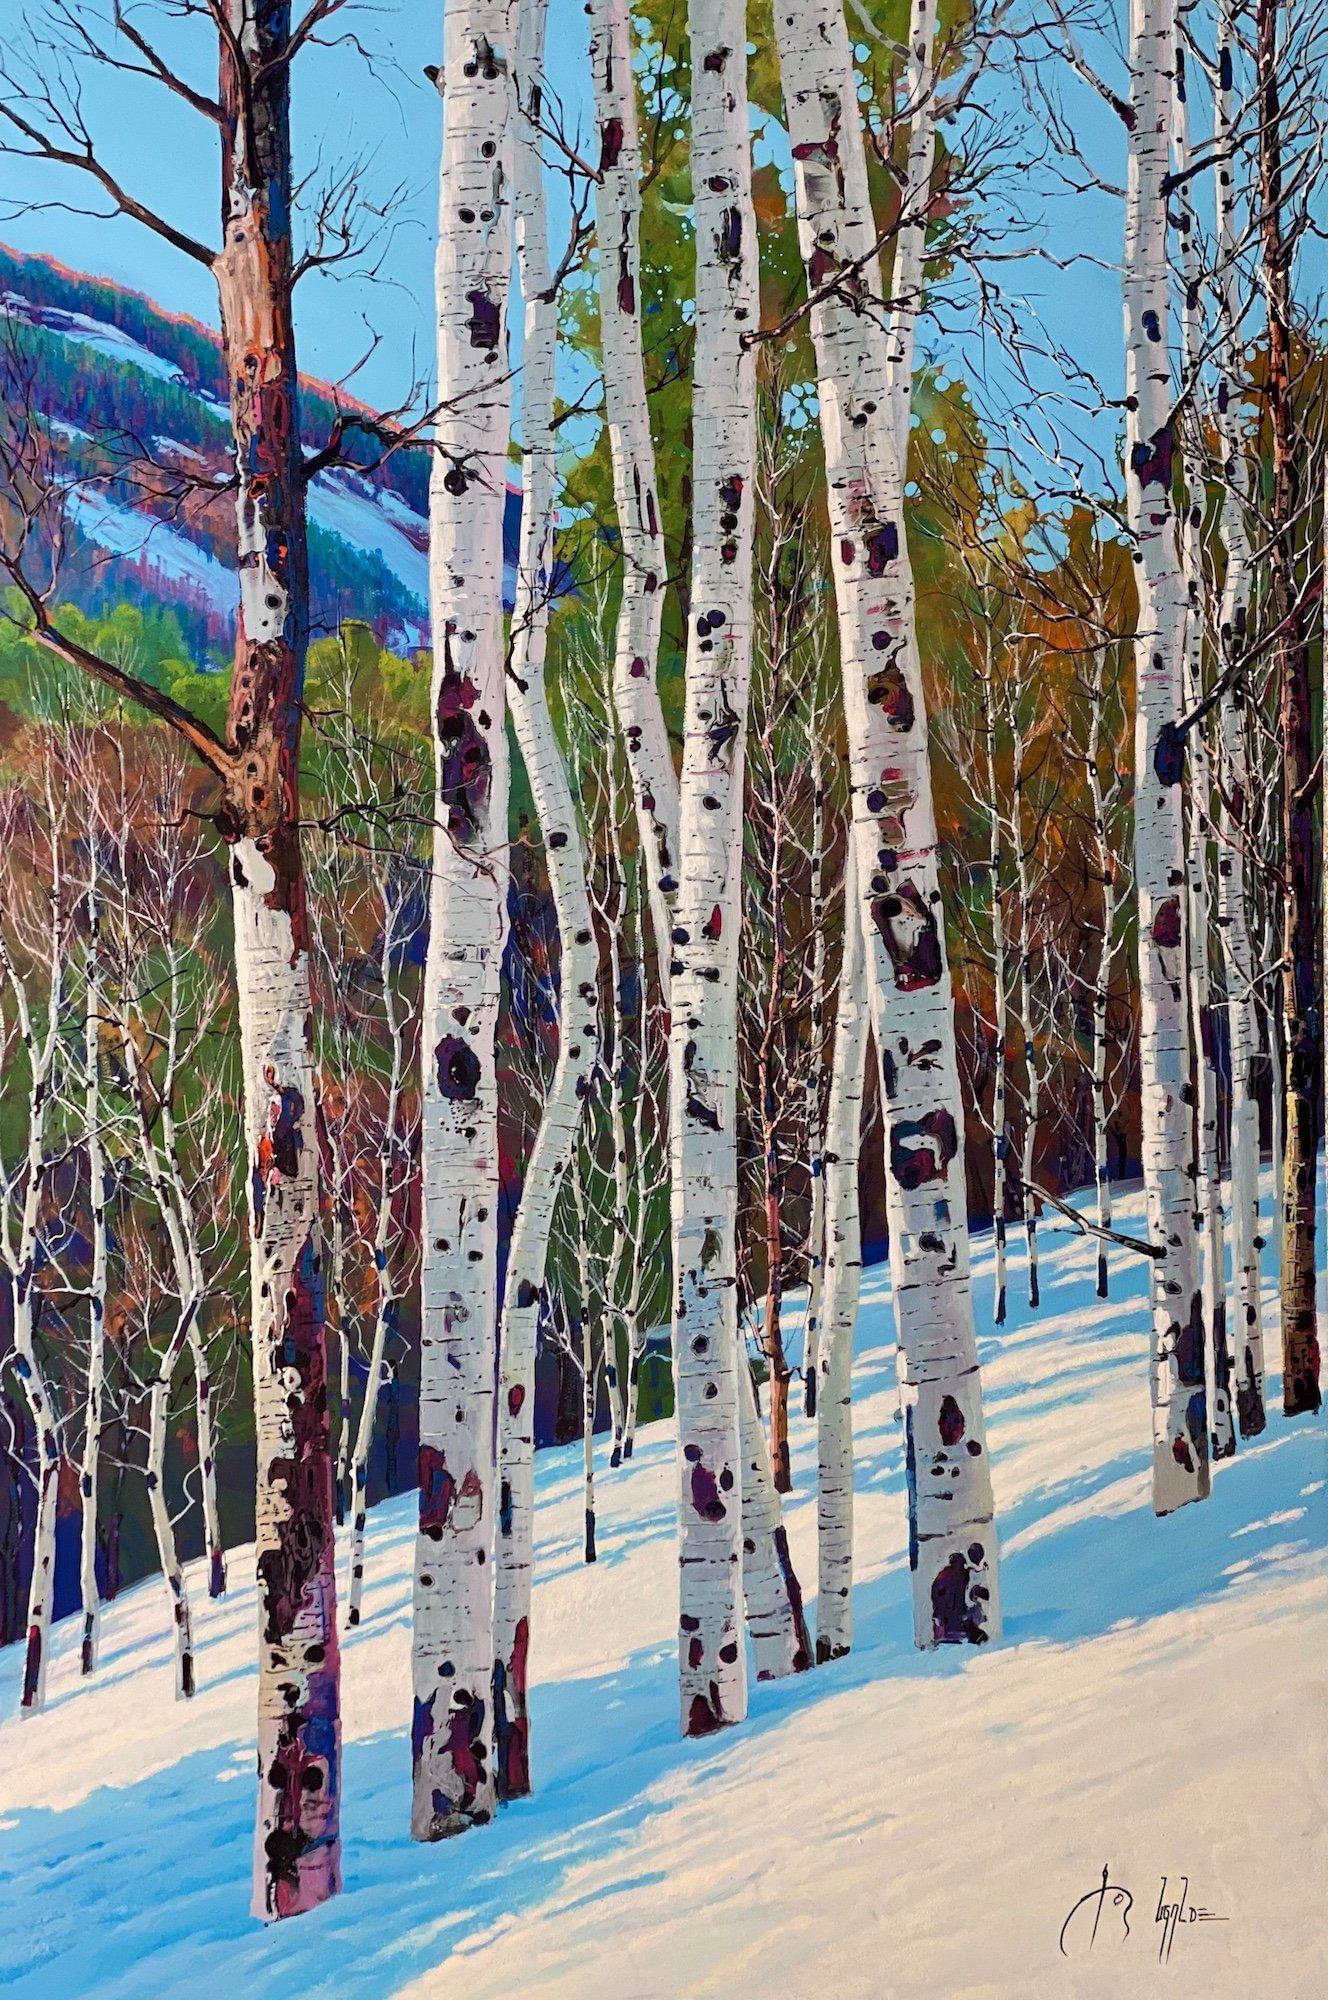 Durango Winter-Painting-Roberto Ugalde-Sorrel Sky Gallery